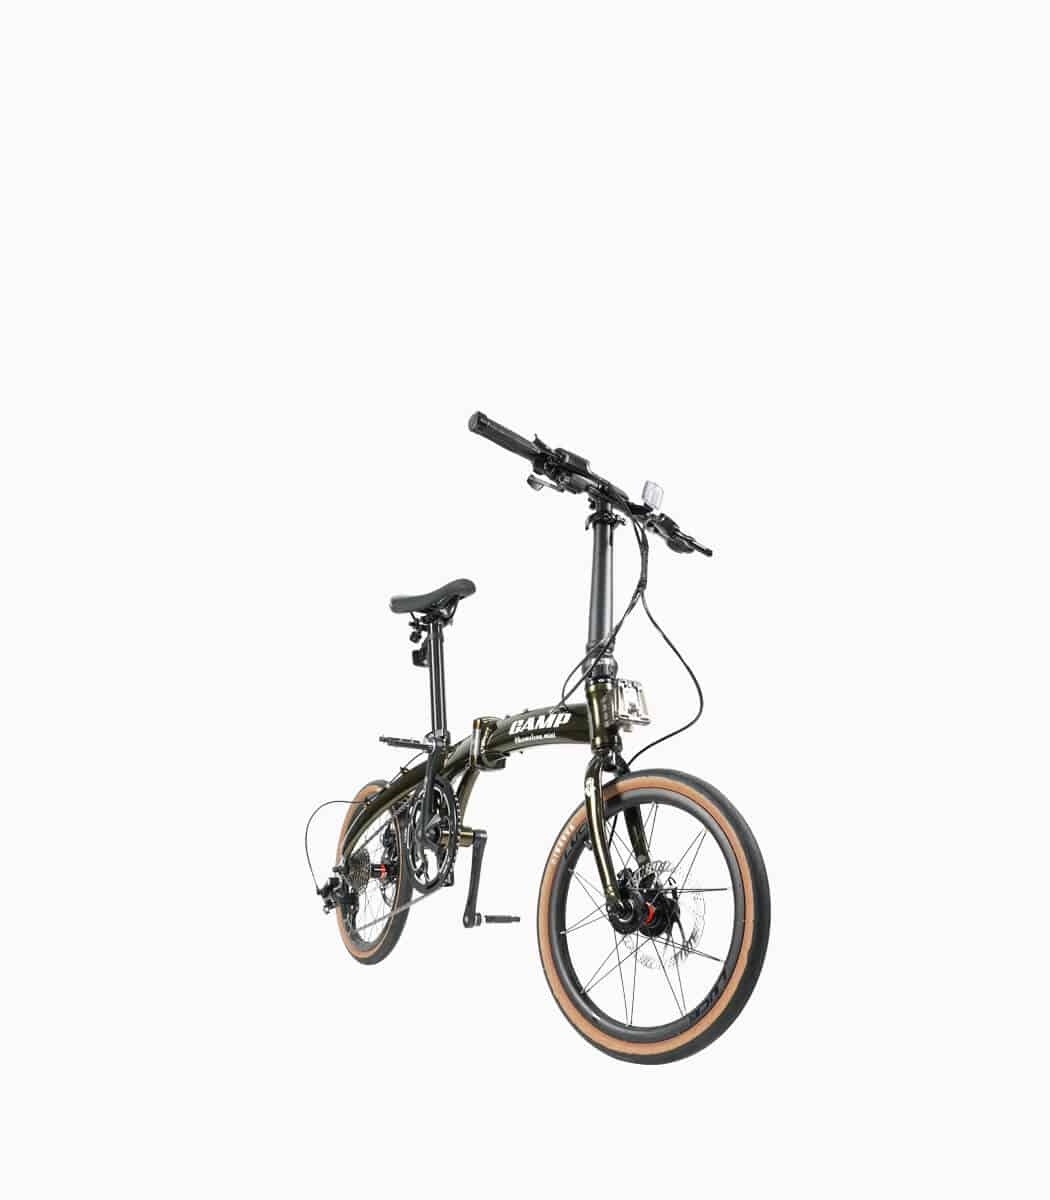 CHAMELEON MINI (BLACK GOLD) foldable bicycle angled right